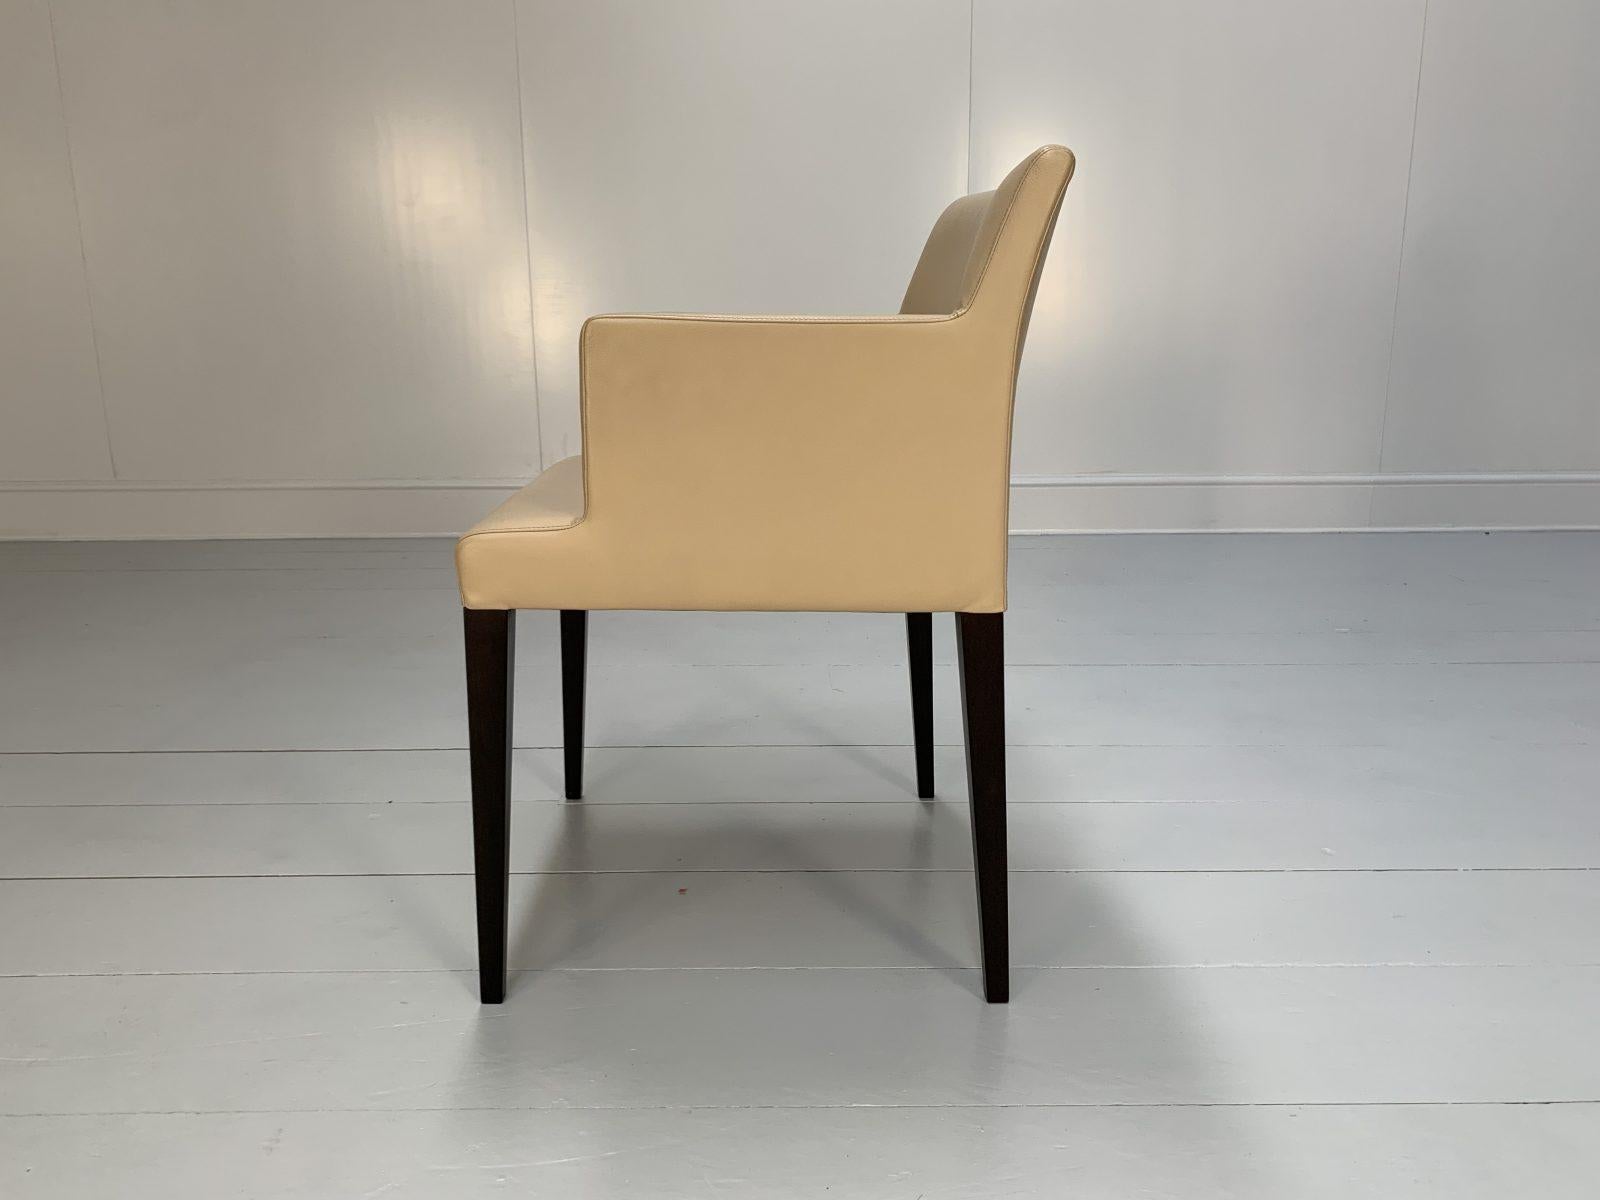 Suite of 6 Poltrona Frau “Liz B” Dining Chairs – In Brown “Pelle Frau” Leather 5